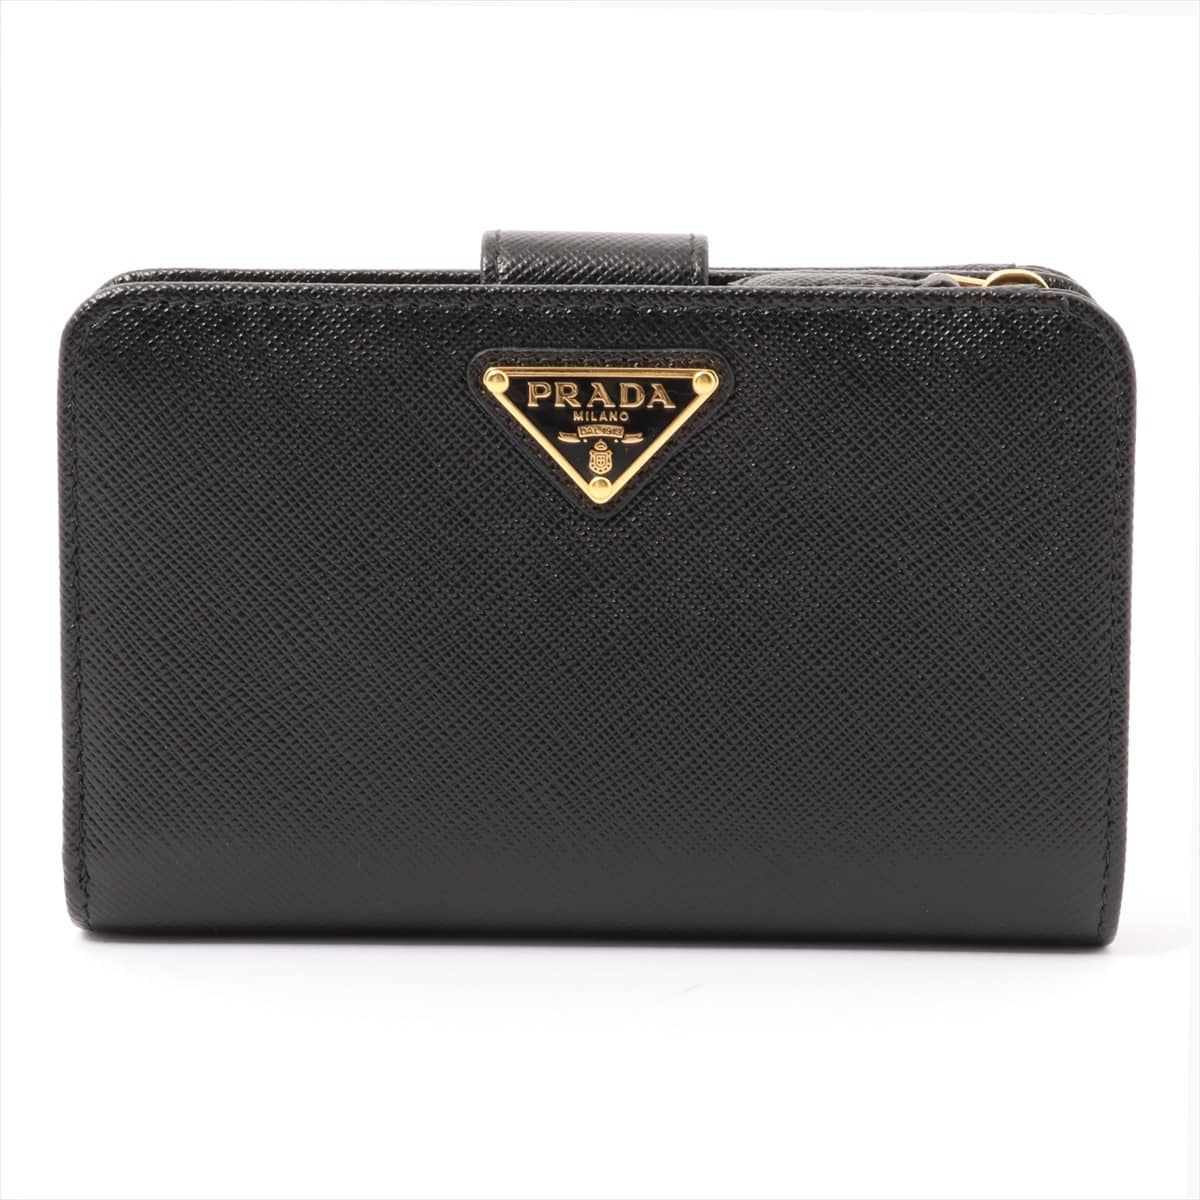 Prada Saffiano 1ML225 Leather Wallet Black